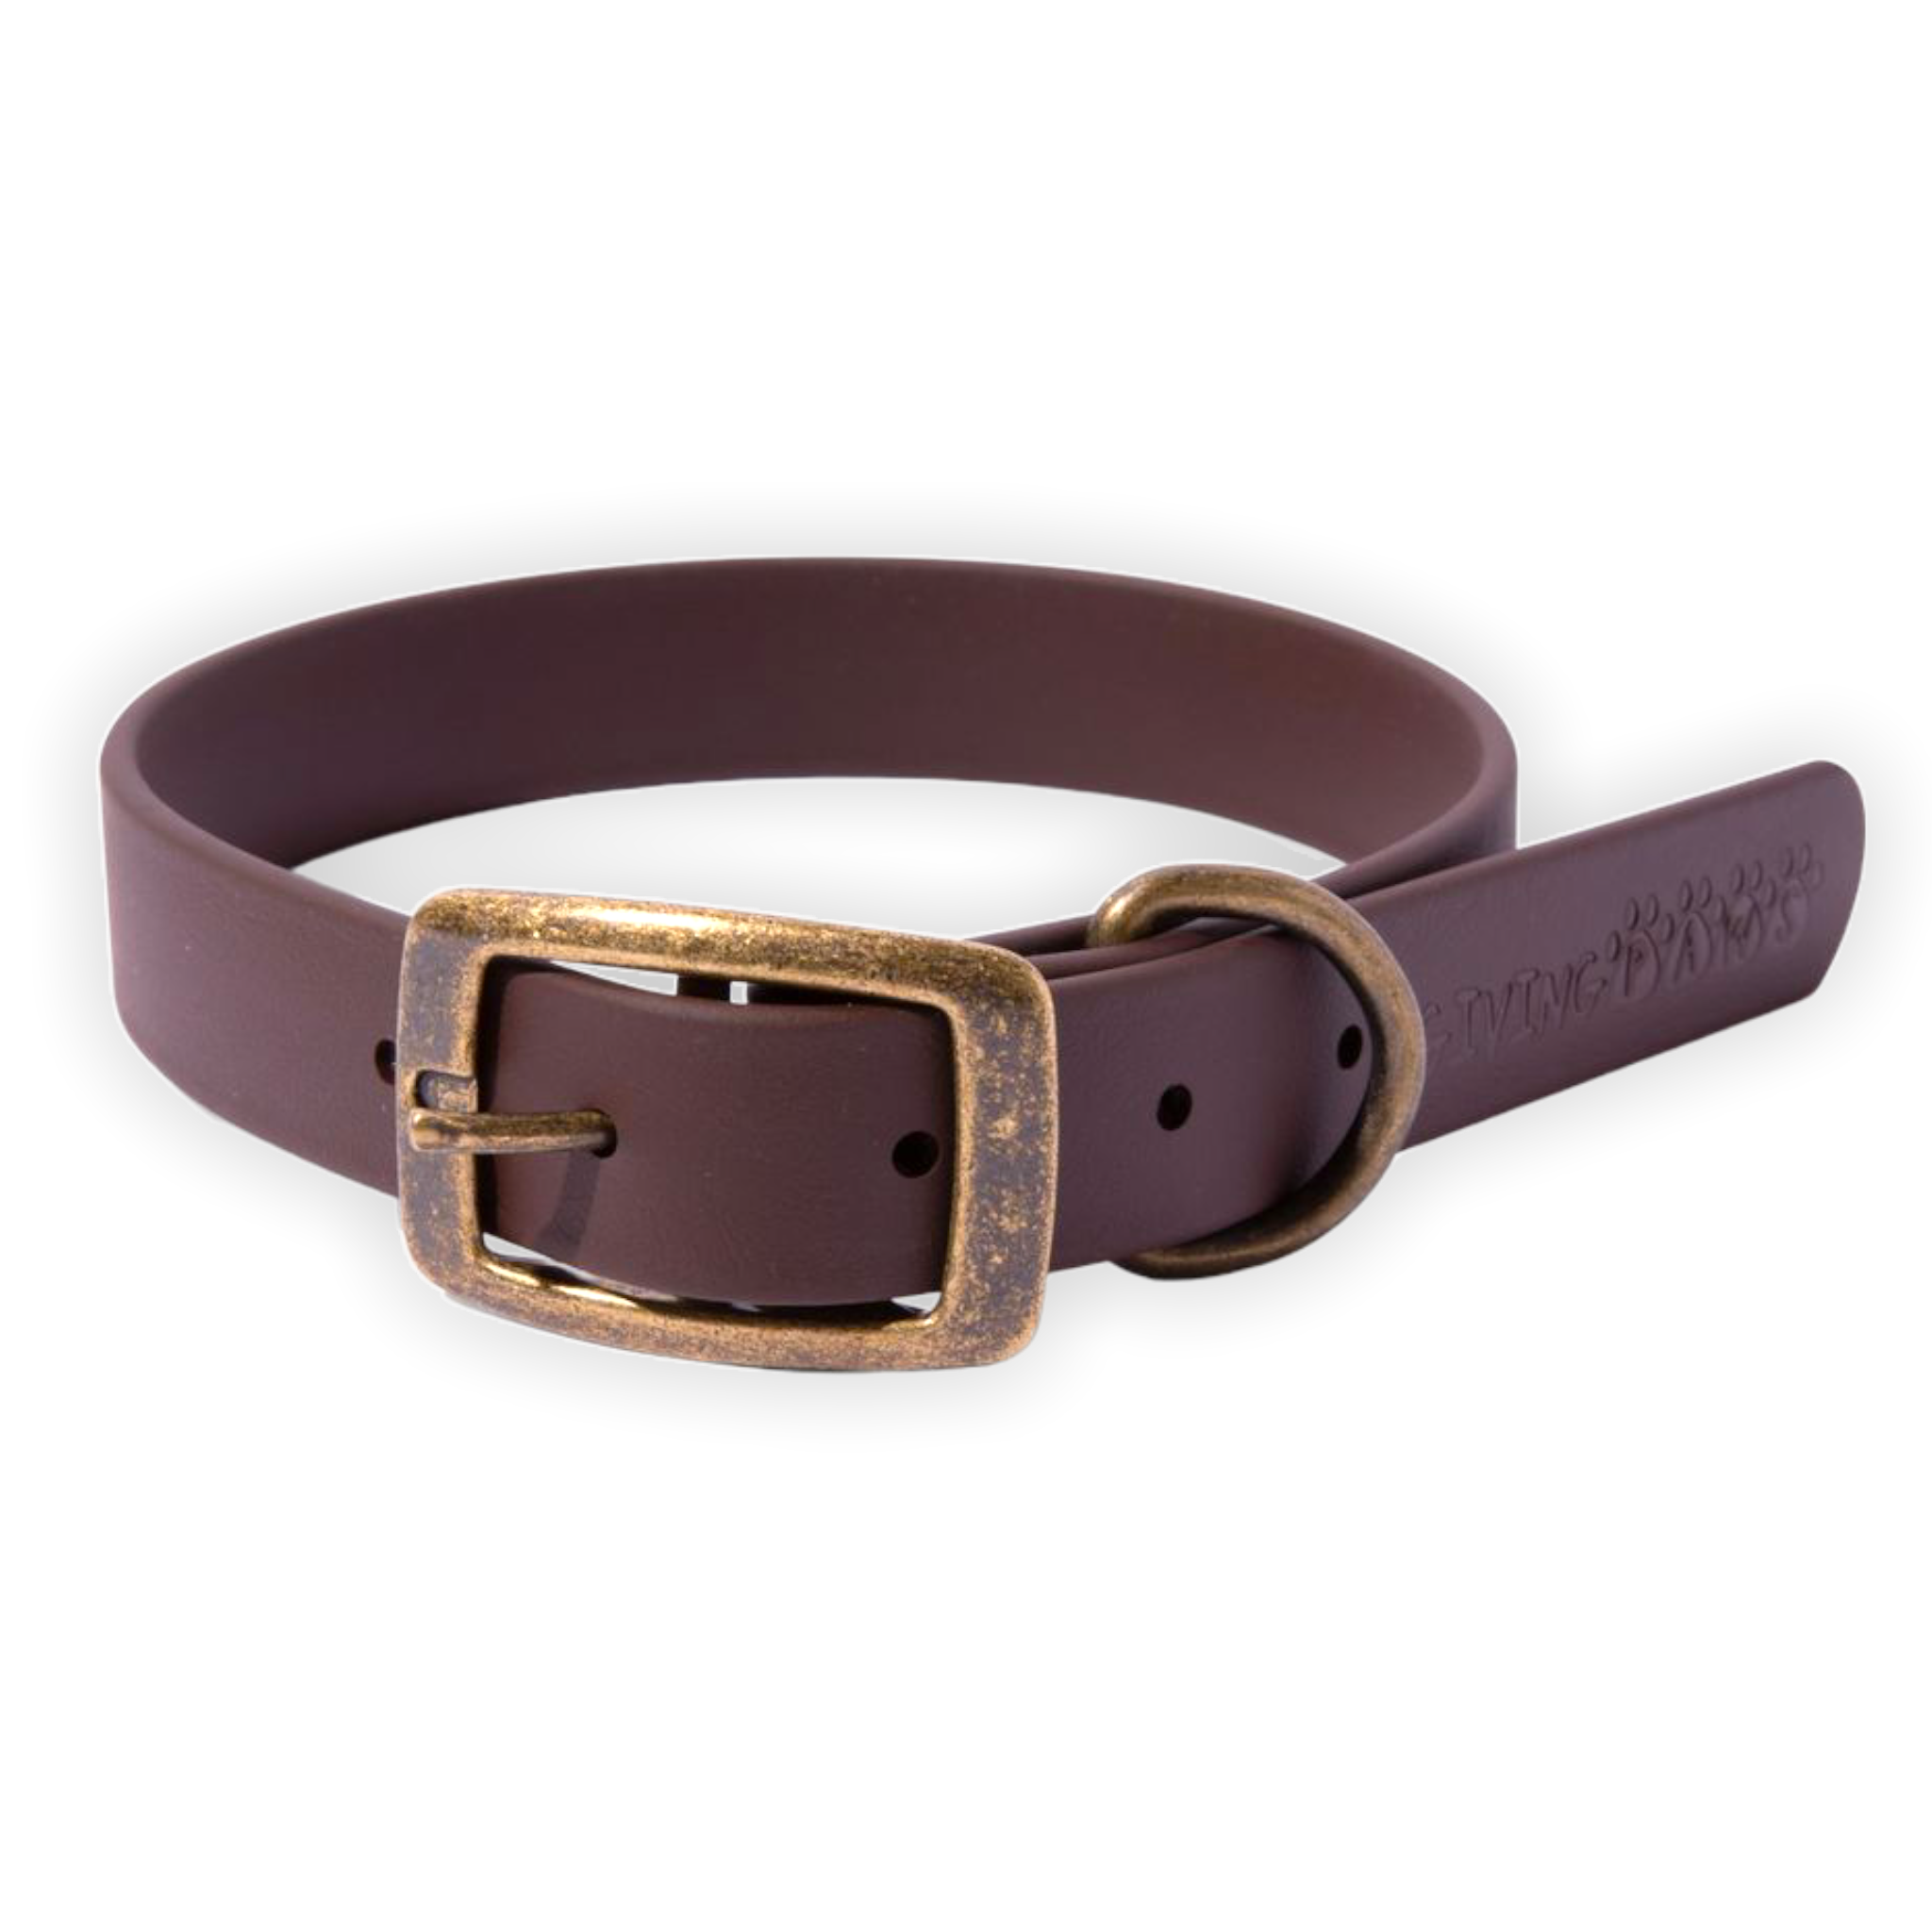 Vintage Vegan Leather Collar - Image 1